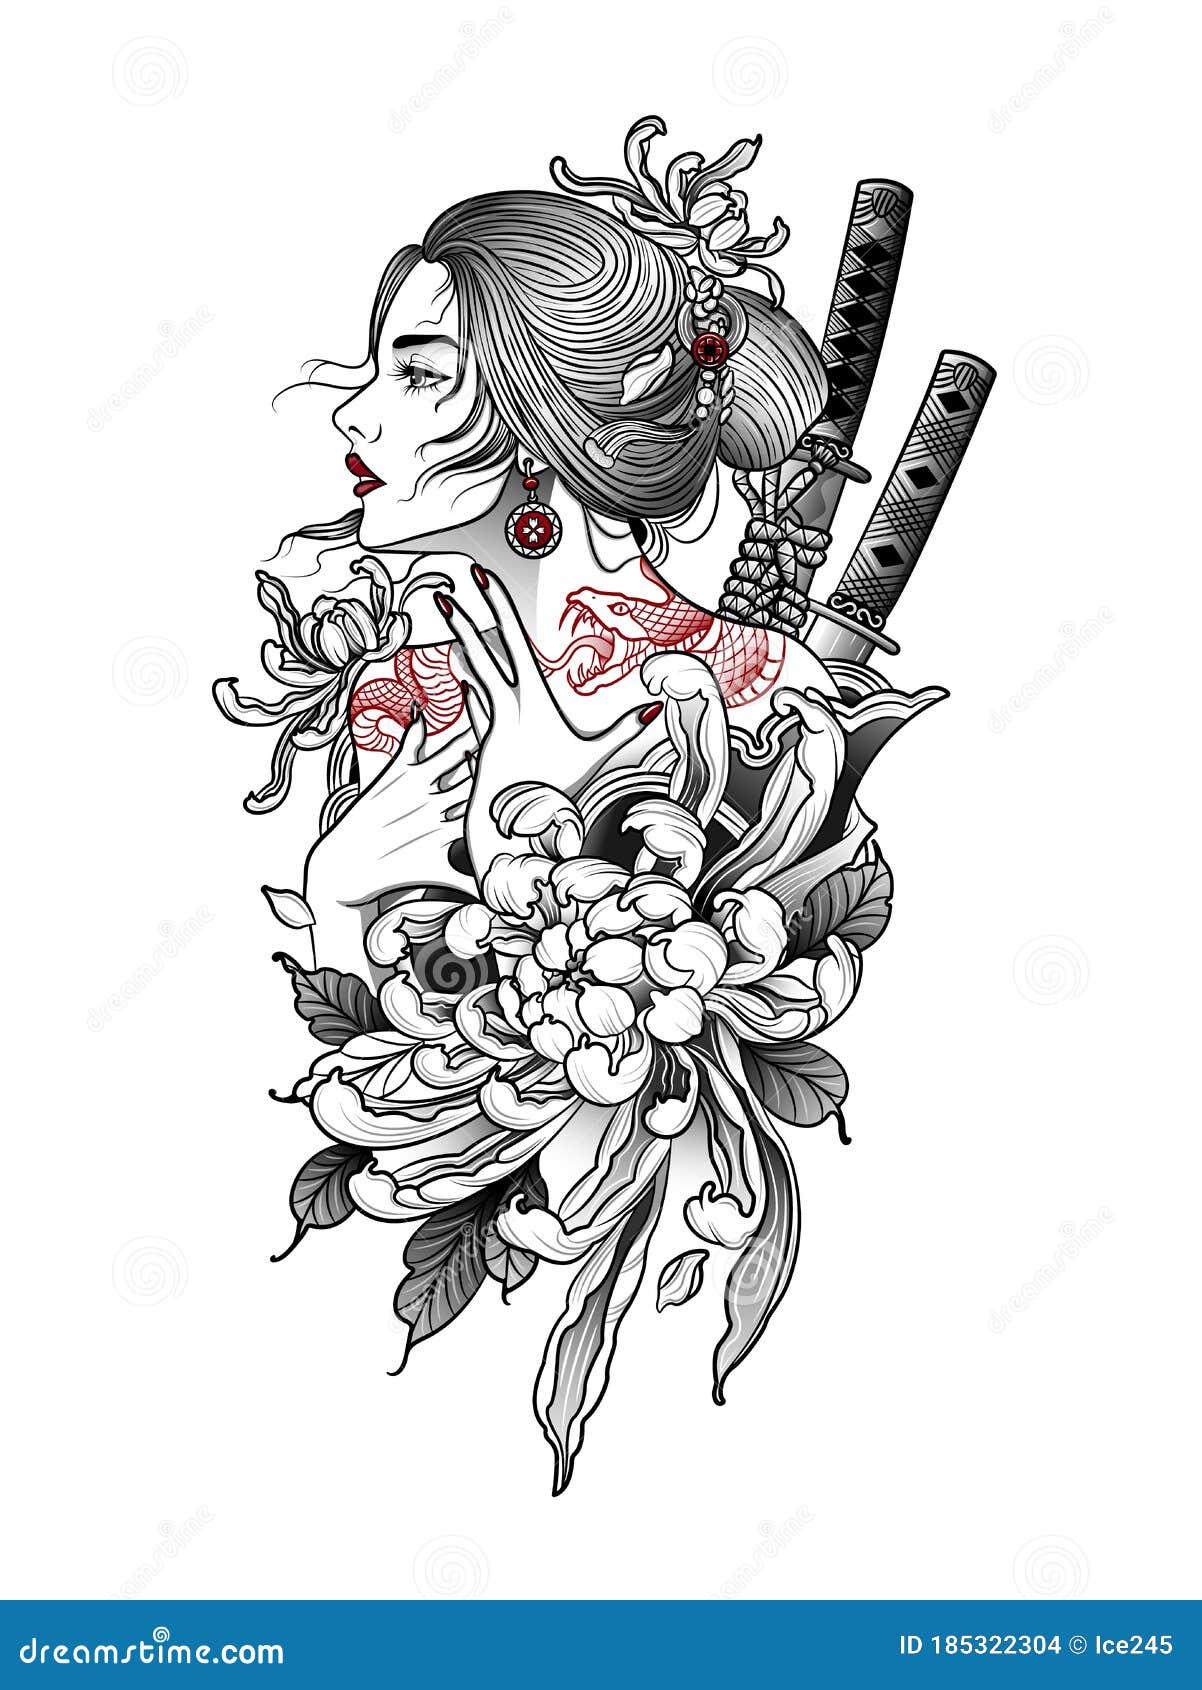 Geisha Samurai Beauty Fox Mask Oni Girl Power Flowers Sketches Temporary  Tattoo | eBay